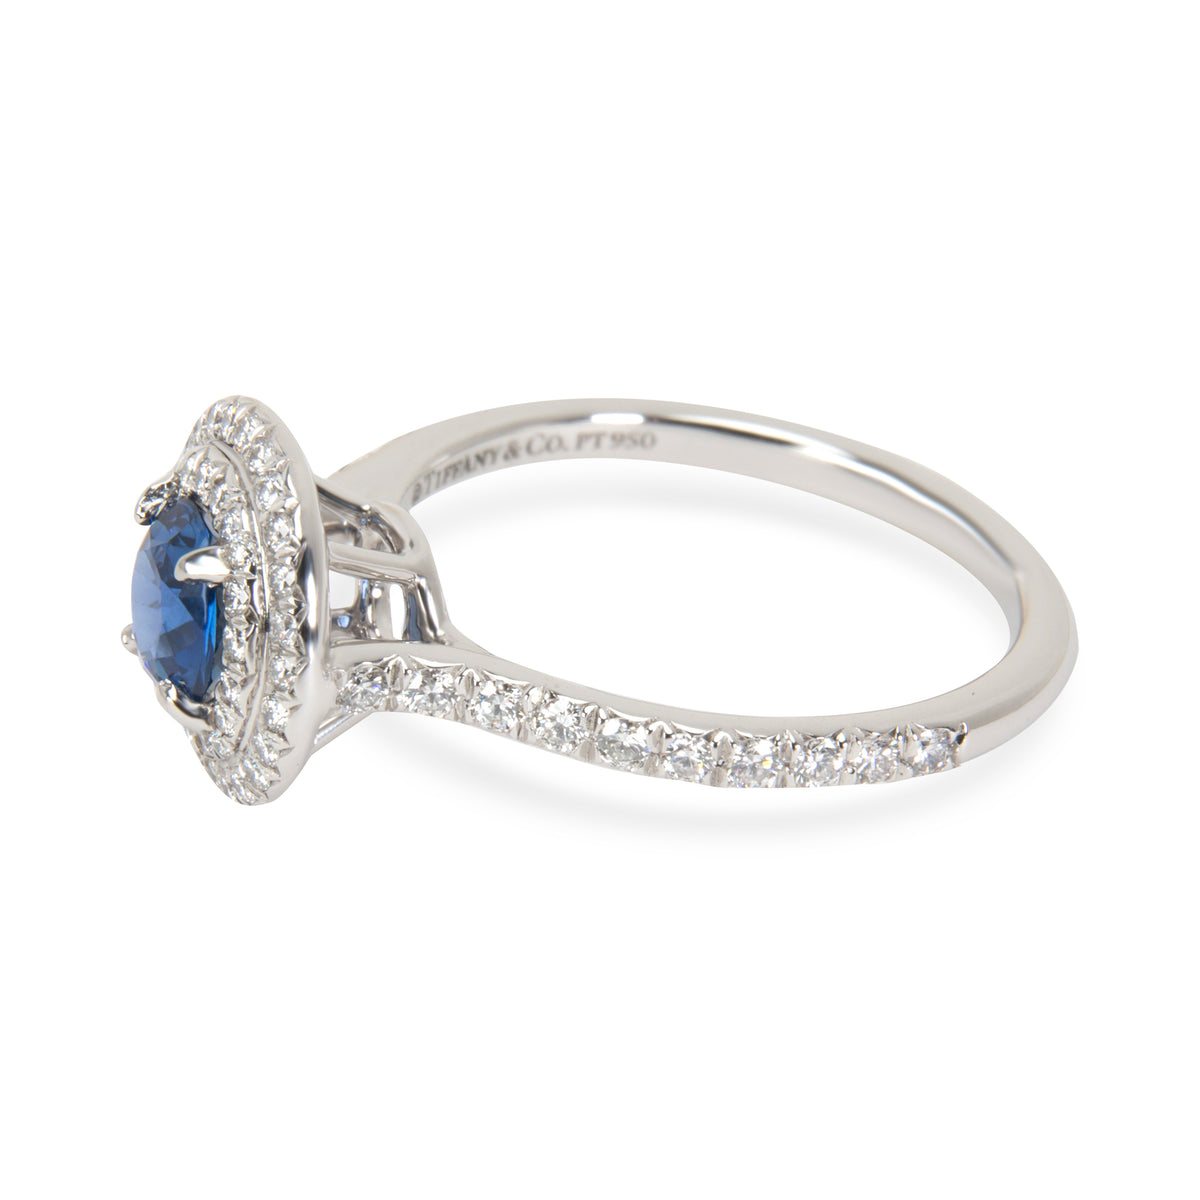 Tiffany & Co. Sapphire Diamond Engagement Ring in  Platinum Blue 0.36 CTW